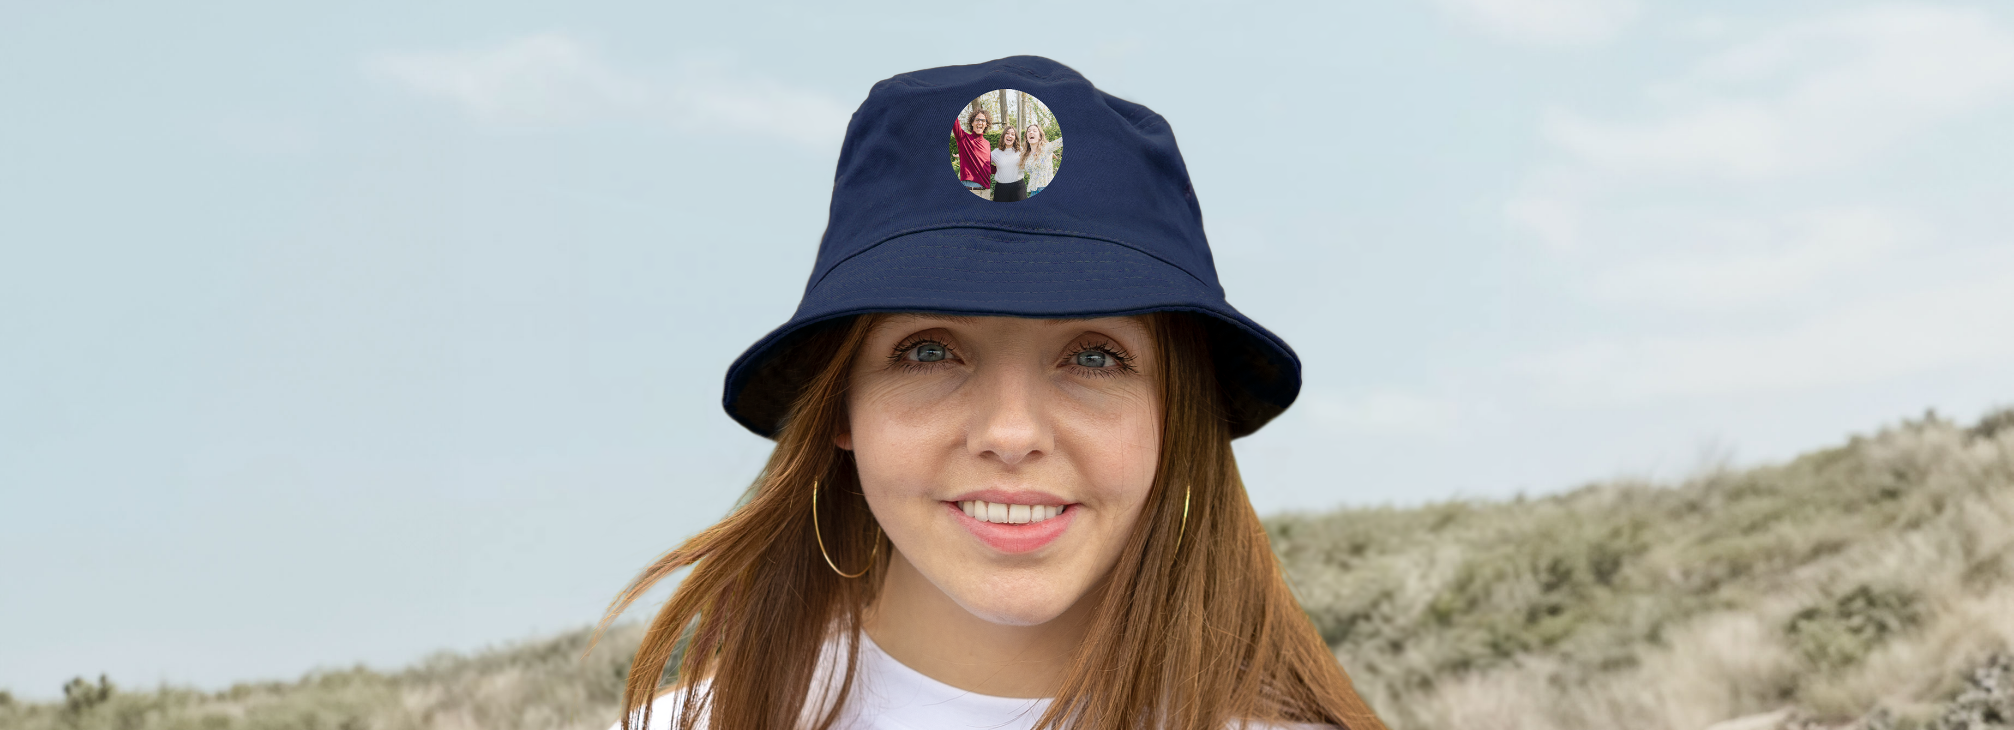 Personalised Caps, Hats & Beanies